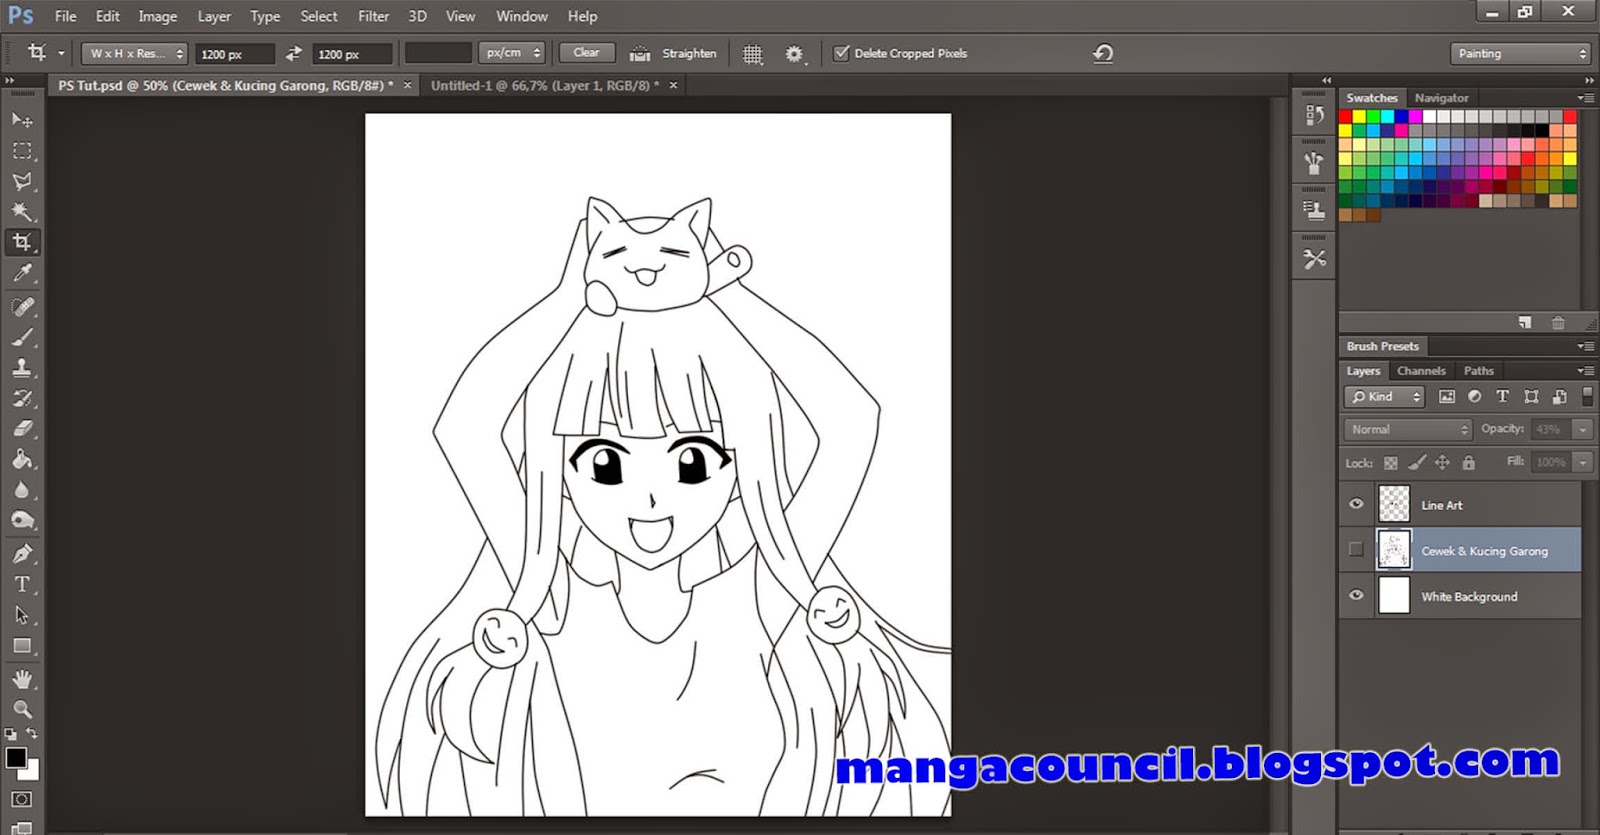 Cara Membuat Line Art Di Adobe Photoshop Manga Council